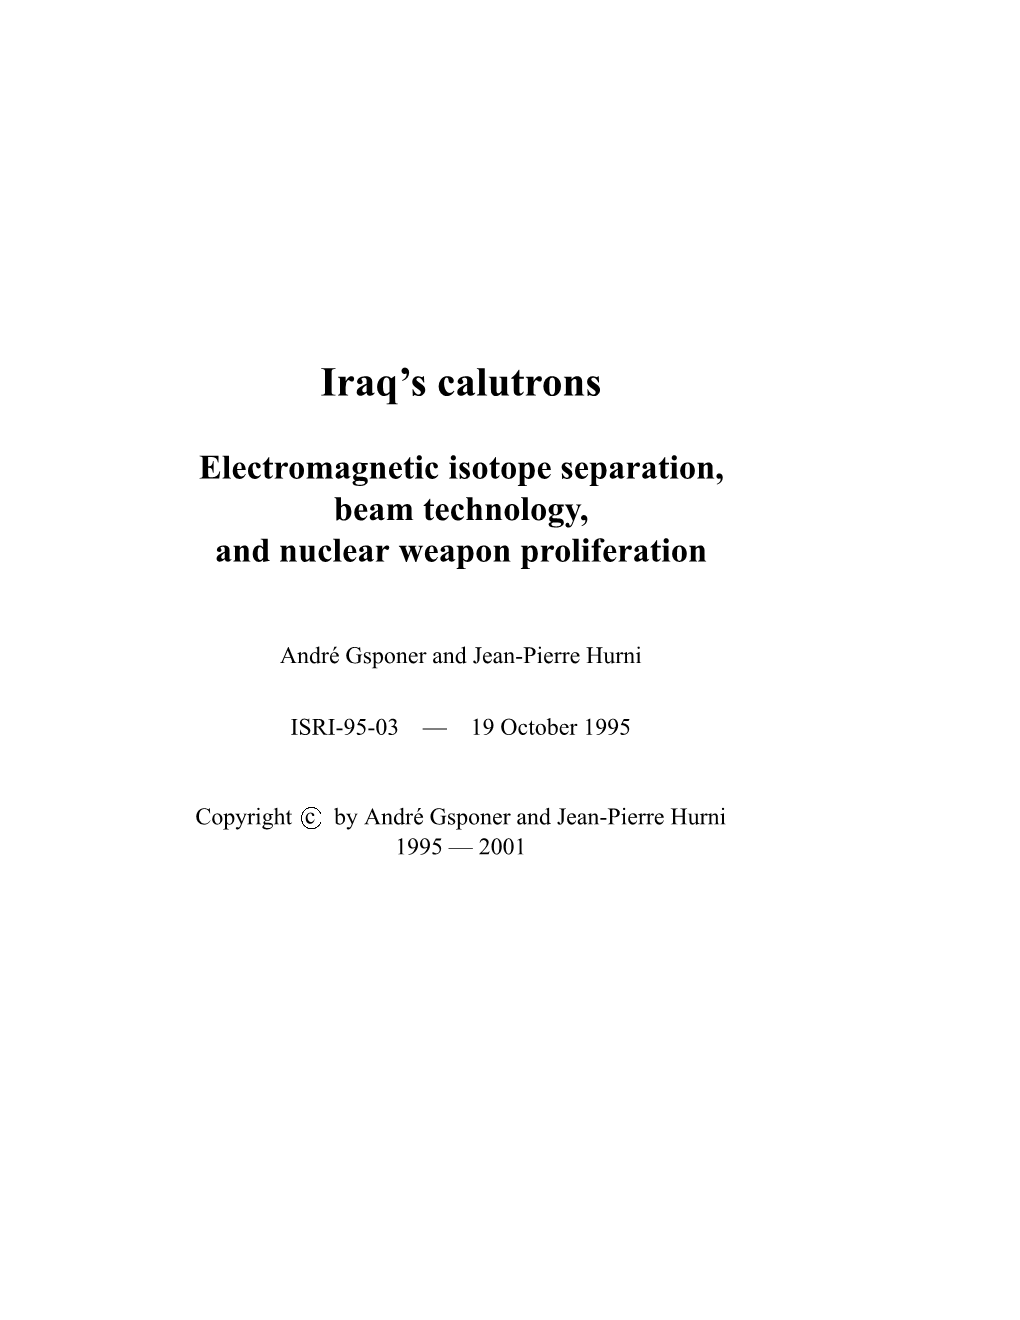 Iraq's Calutrons